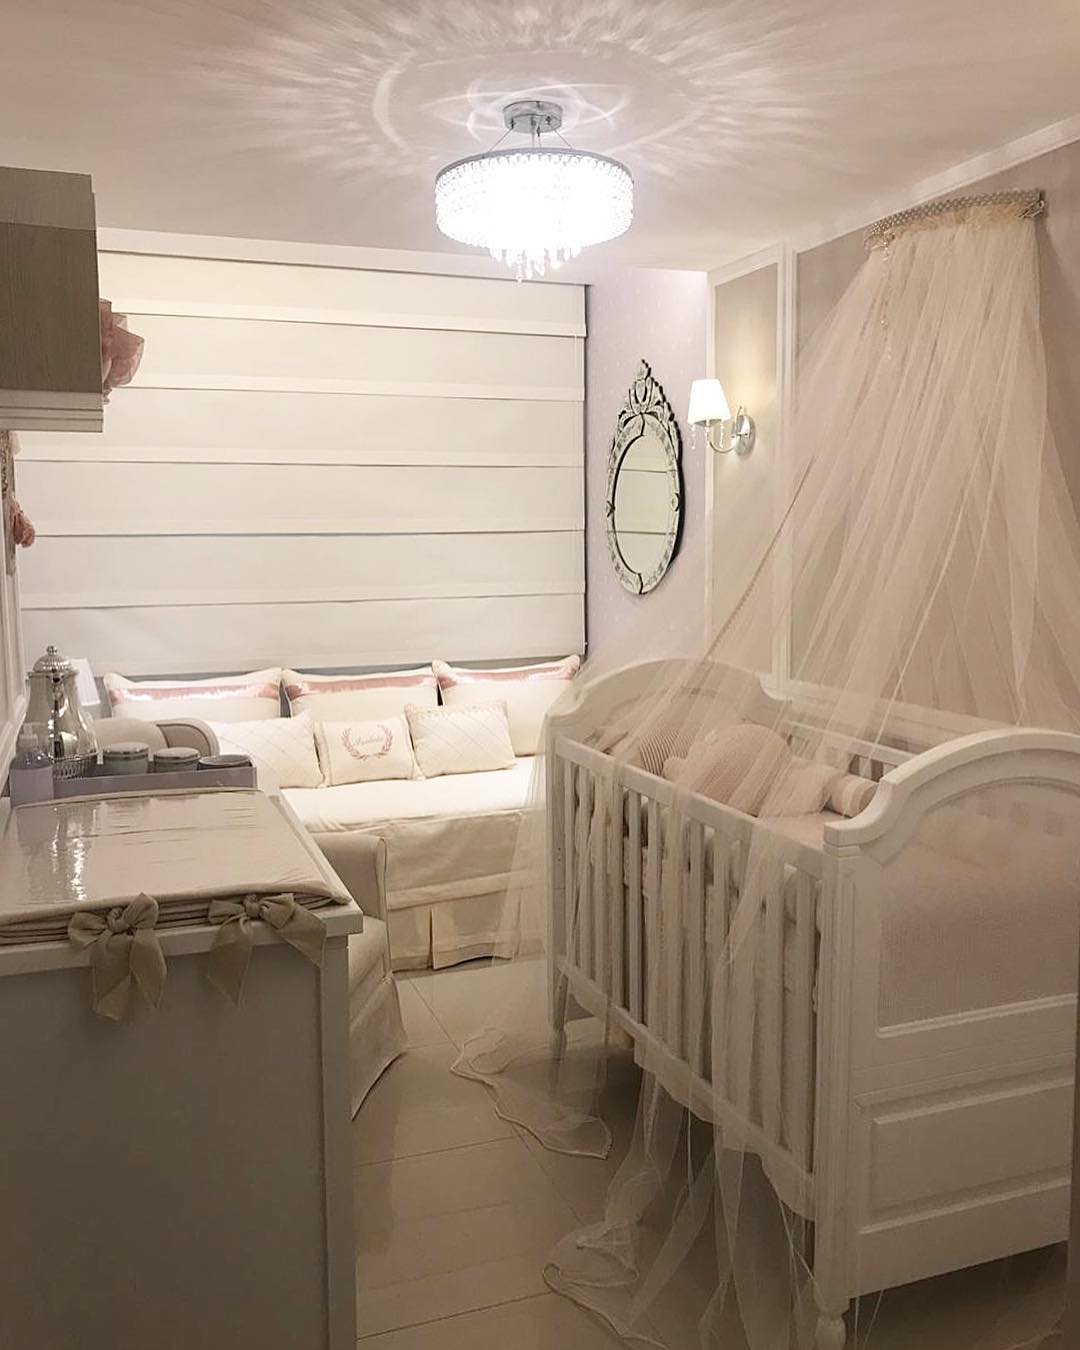 Foto de cortina para quarto de bebe 20 - 23